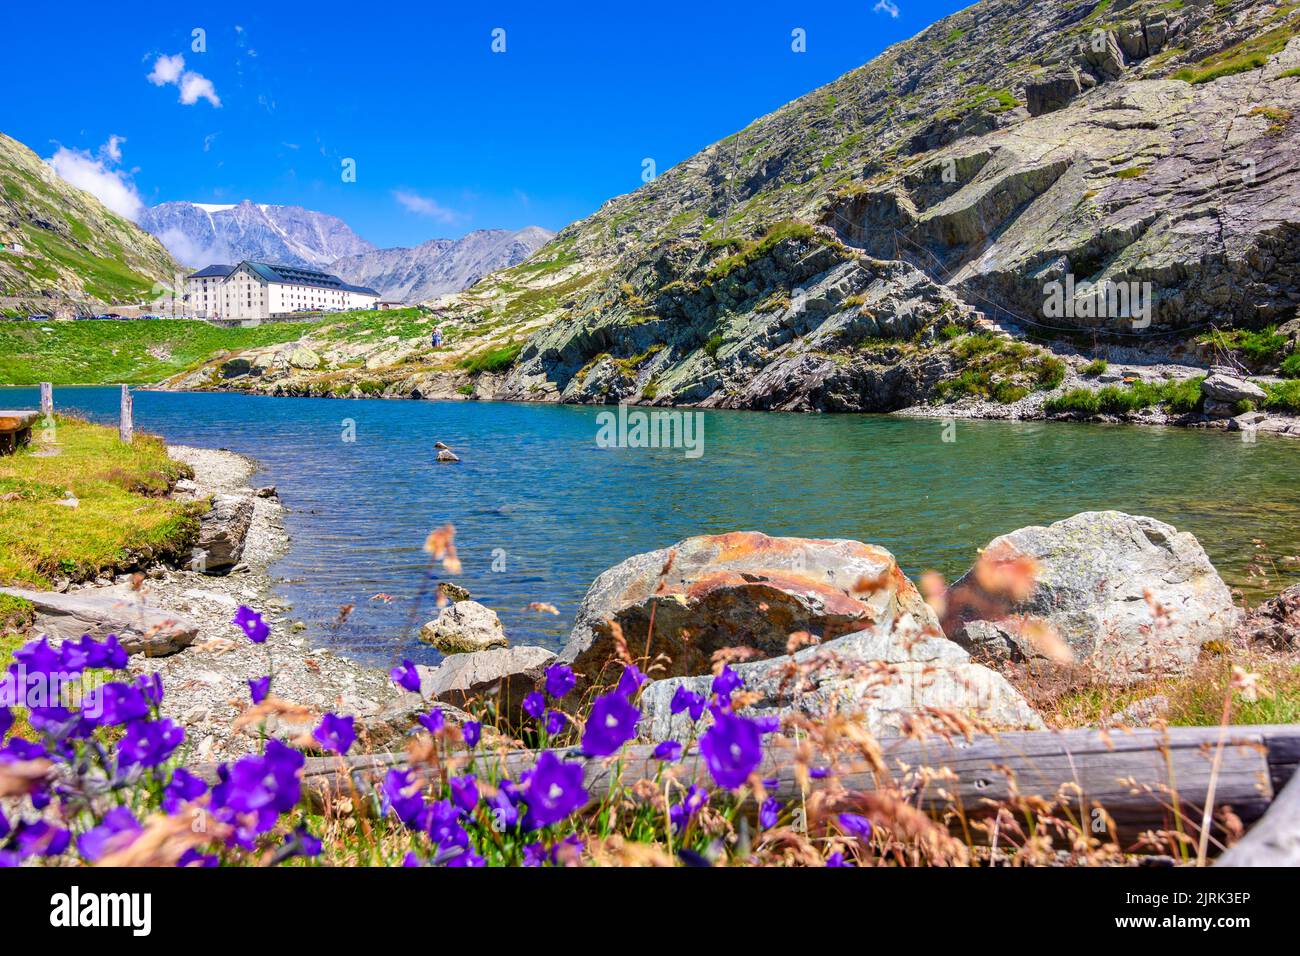 Amazing landscapes at the Great Saint Bernard pass, borders of Italy, France, Switzerland. Stock Photo